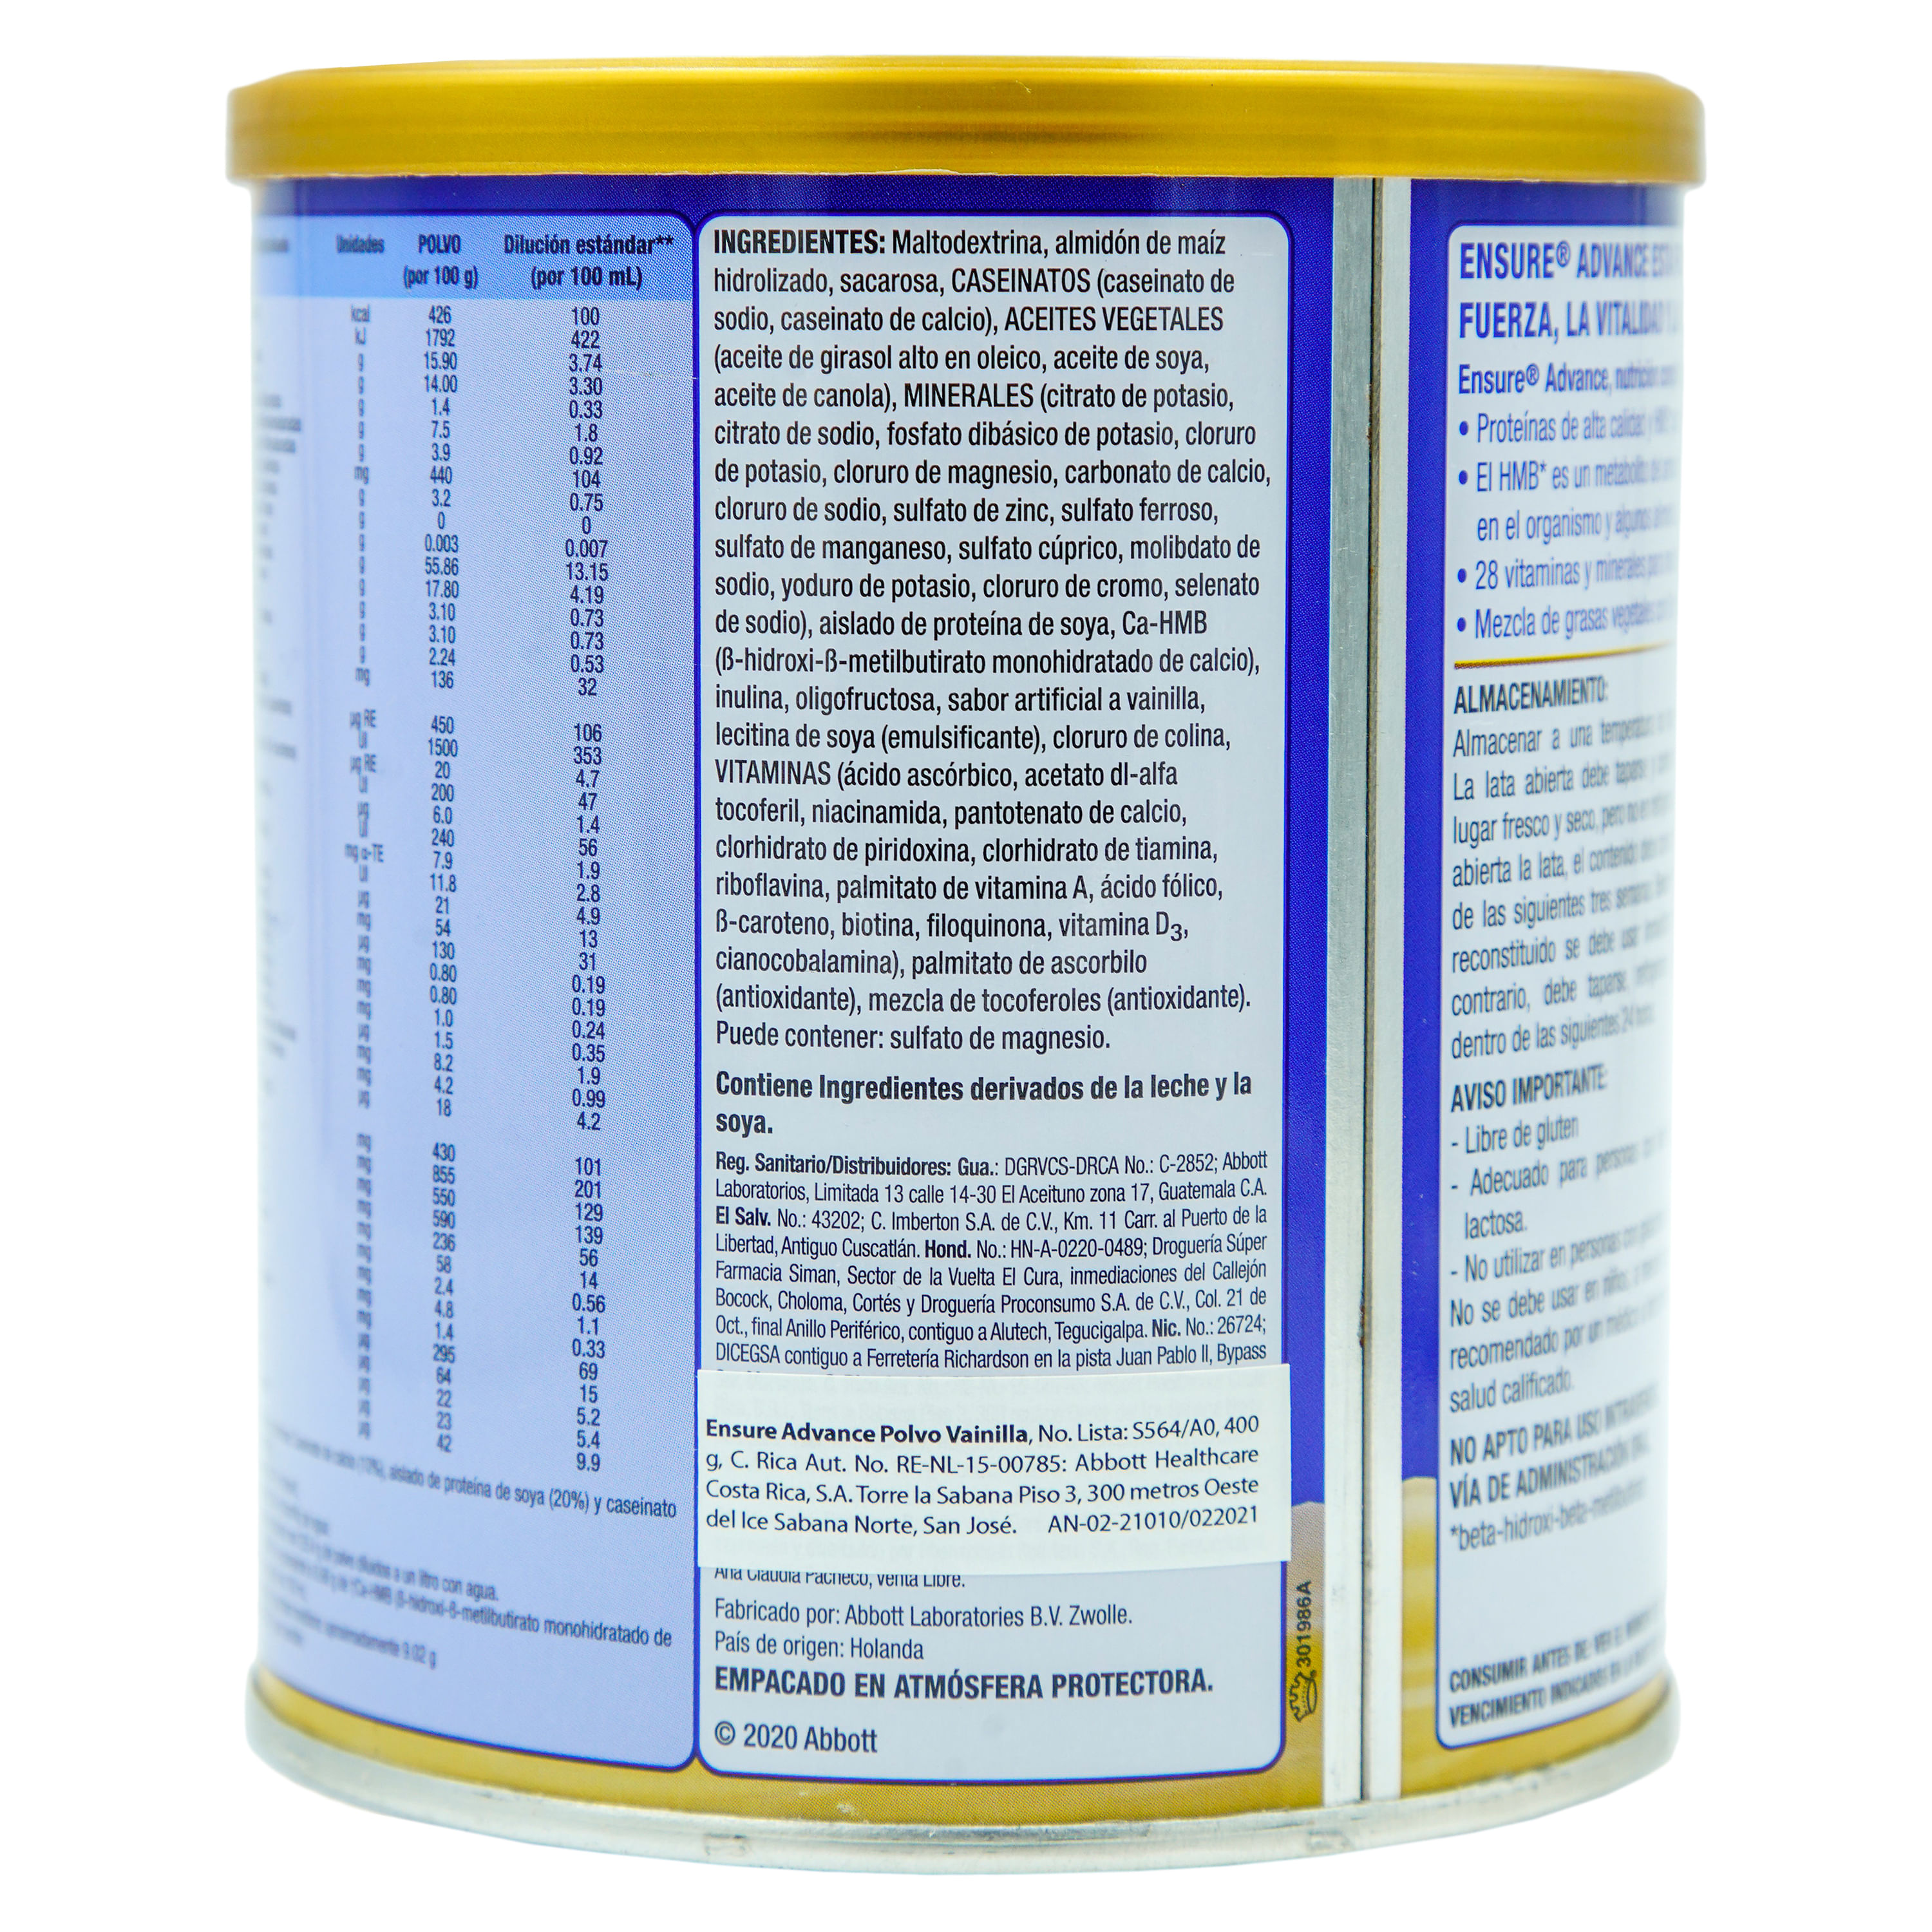 Suplemento Nutricional Glucerna sabor a vainilla en polvo x 400 gr